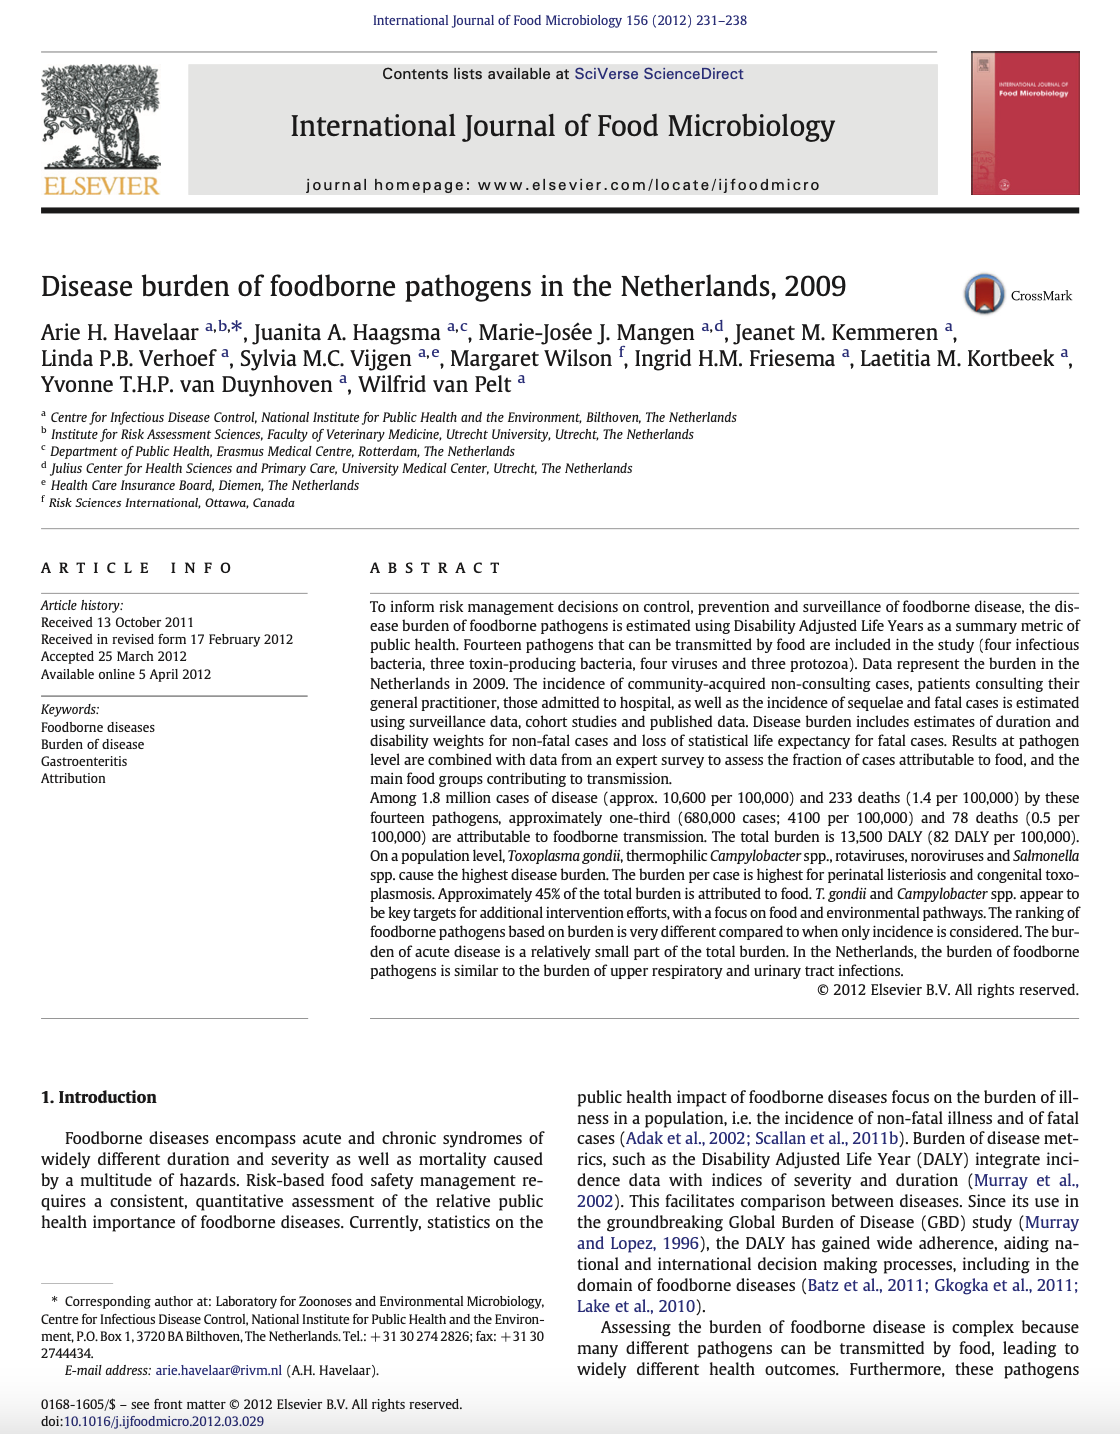 Disease burden of foodborne pathogens in the Netherlands, 2009